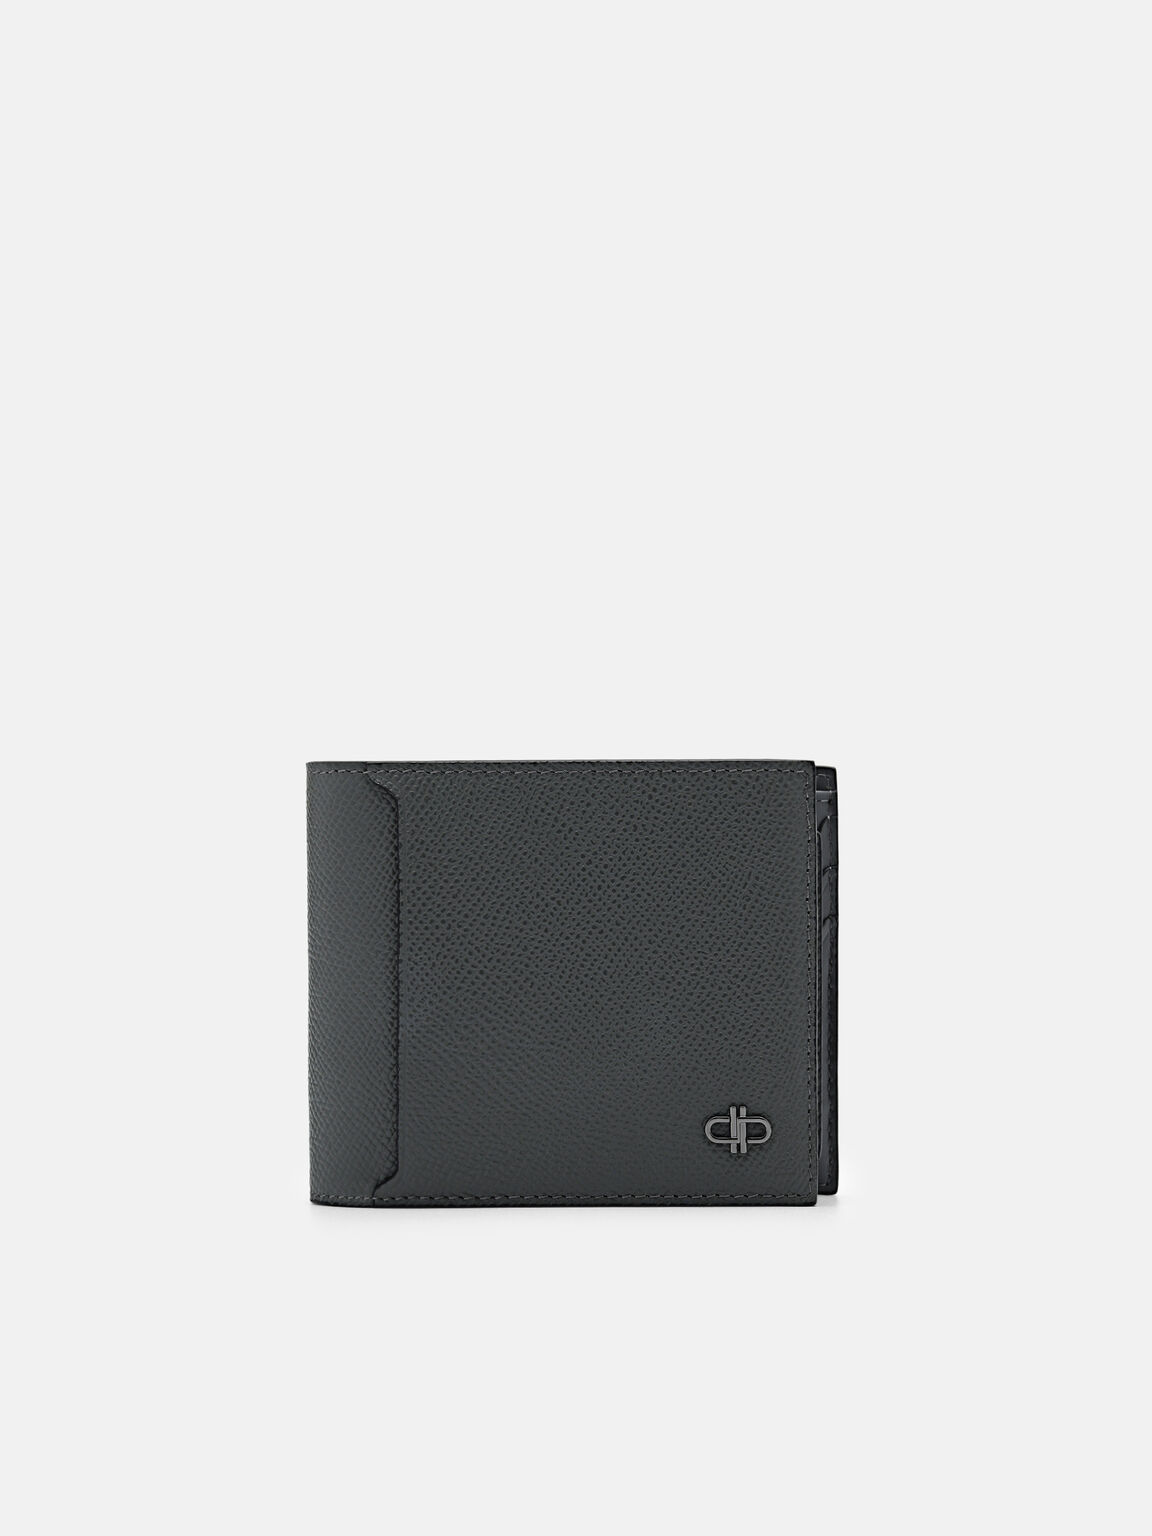 PEDRO Icon Leather Bi-Fold Wallet with Insert, Dark Grey, hi-res